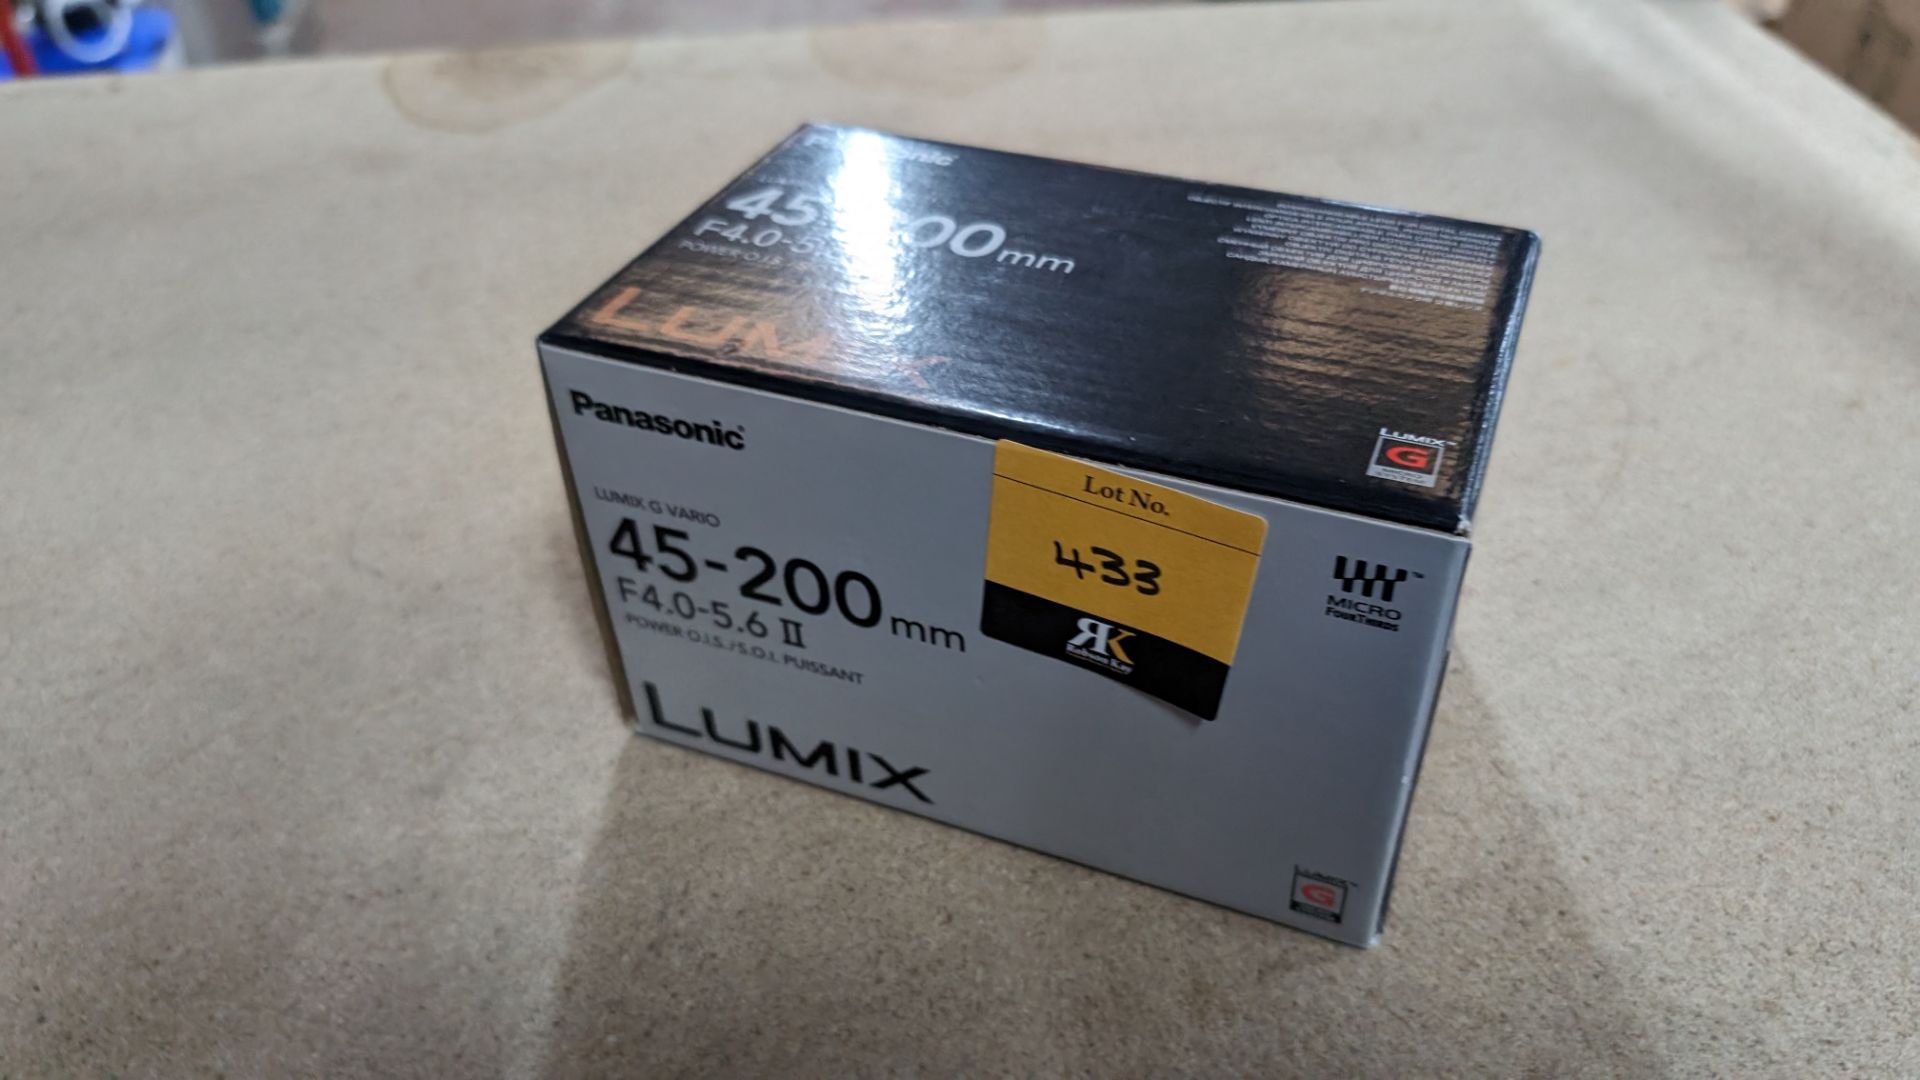 Panasonic Lumix G Vario 45-200mm lens, model H-FSA45200, f4.0-5.6 II - Bild 2 aus 6